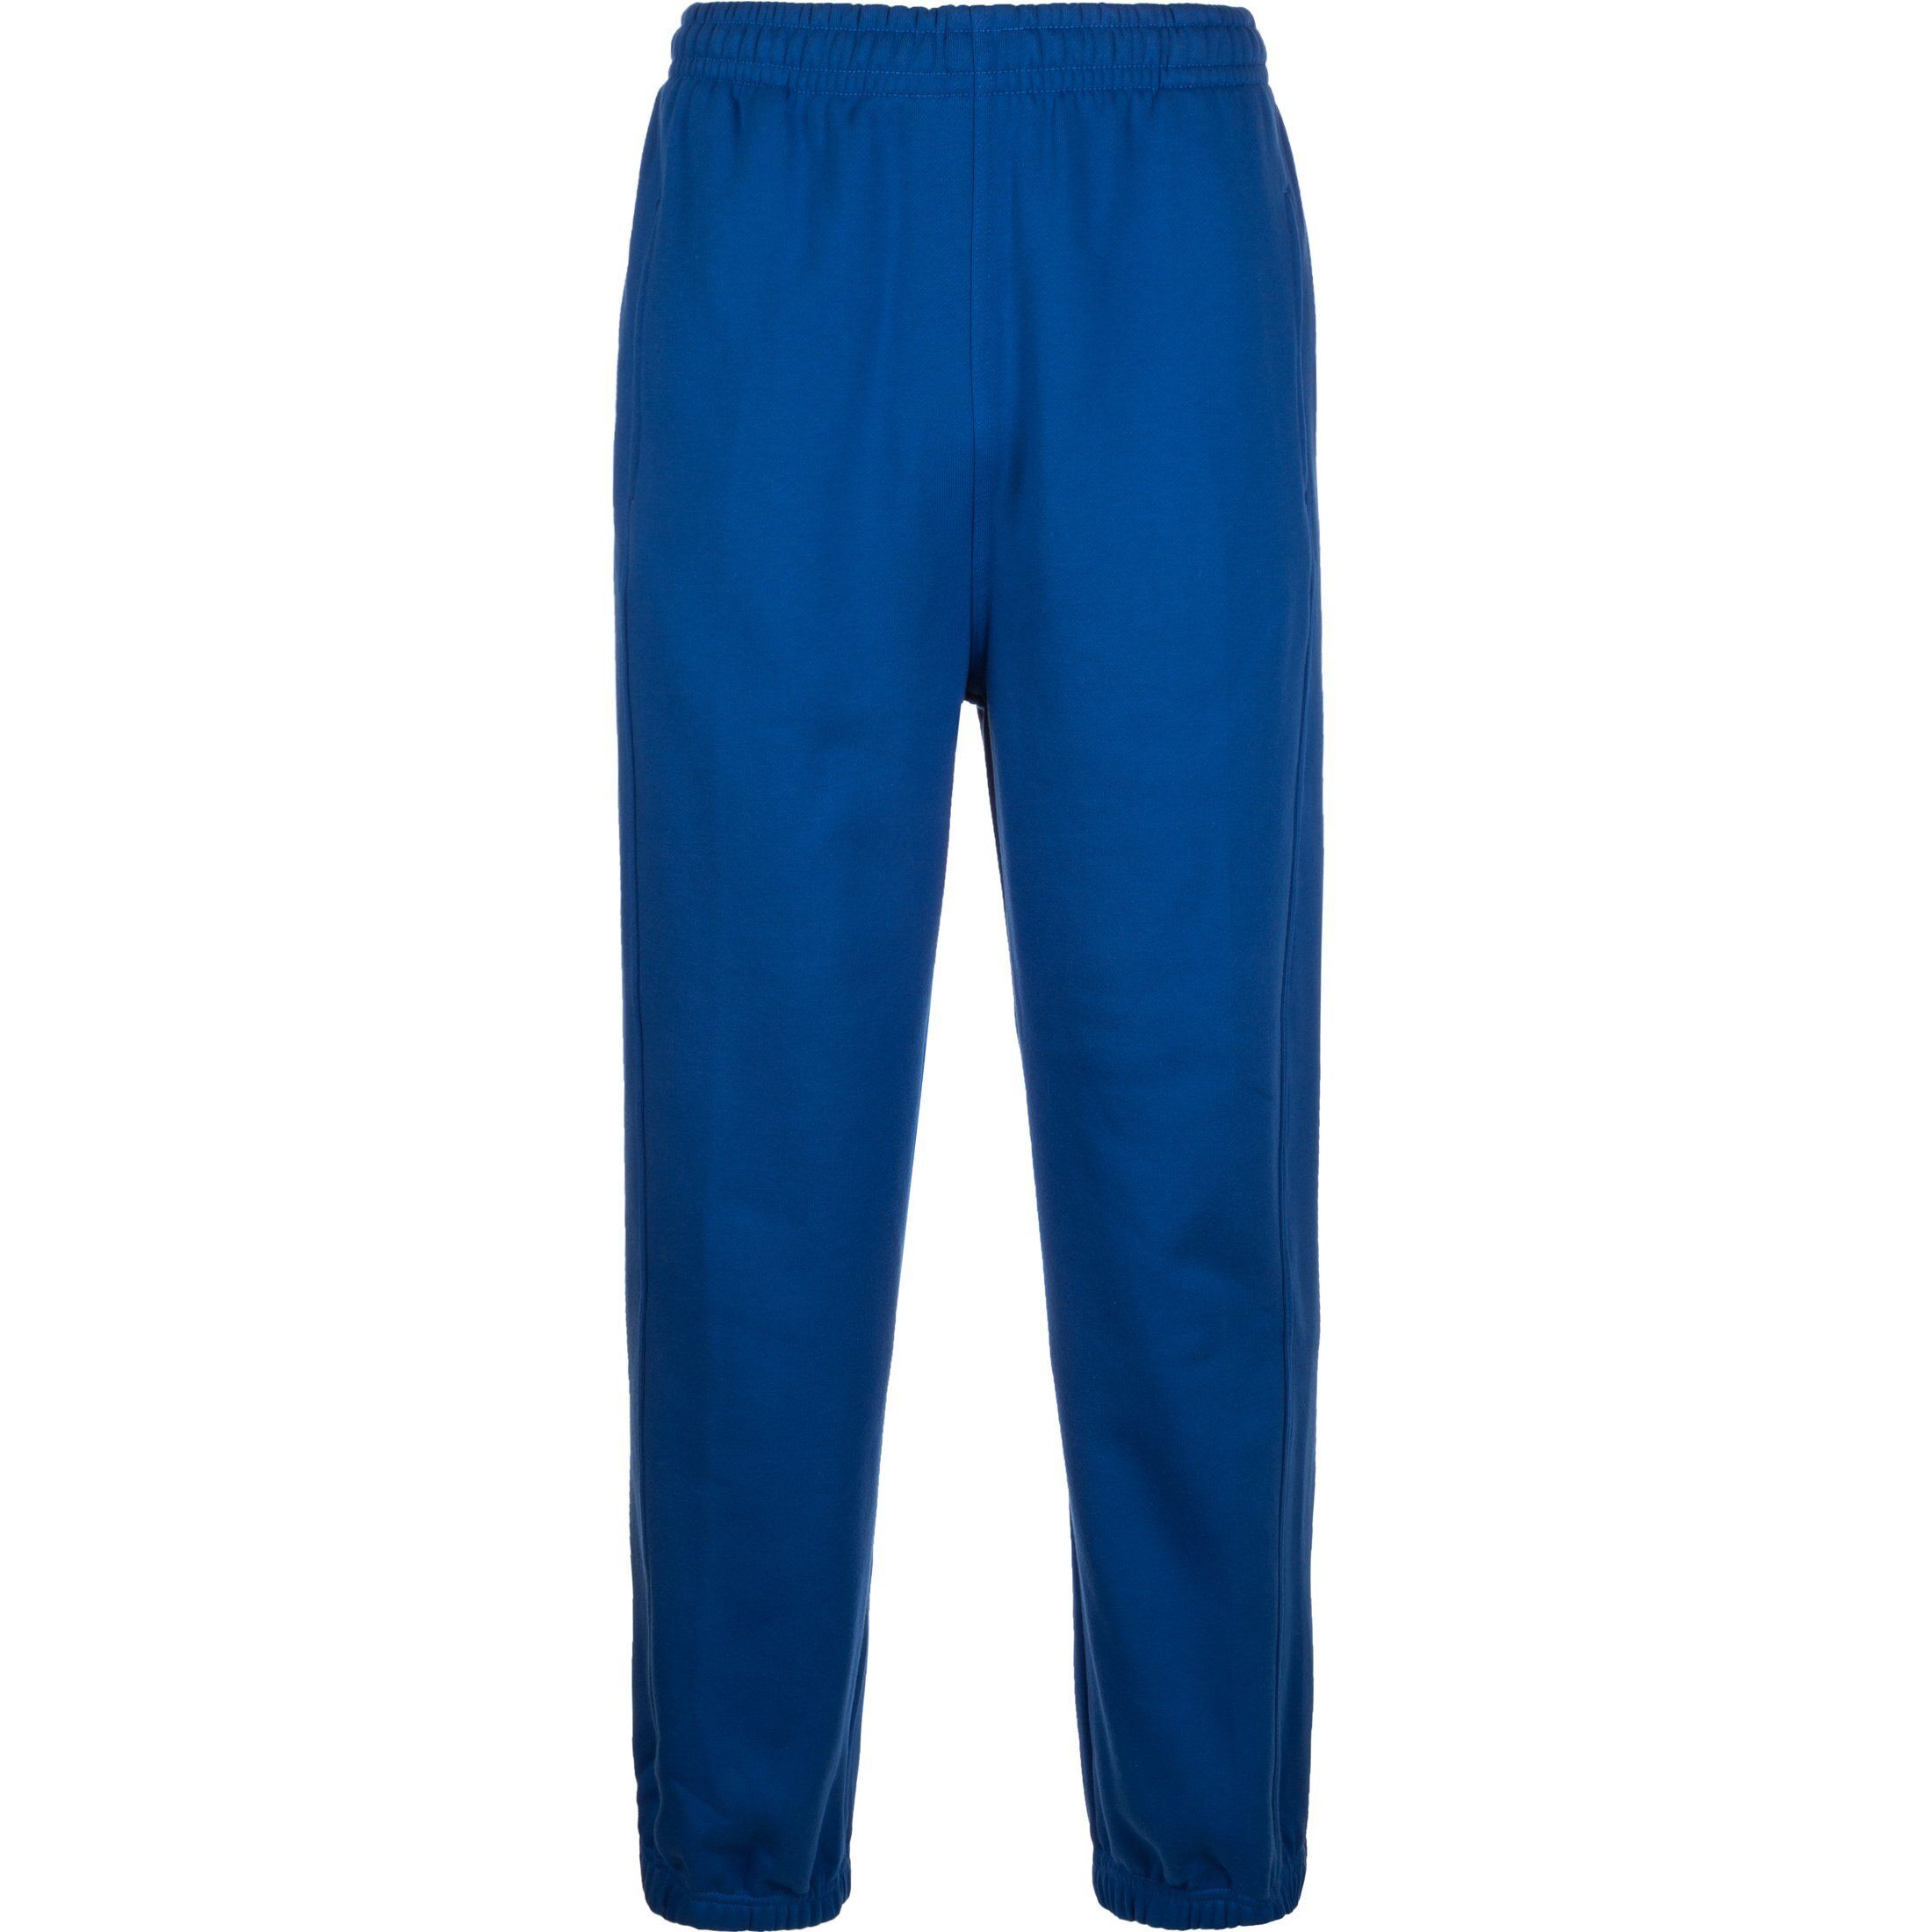 URBAN CLASSICS Jogginghose »Sweatpants«, blau